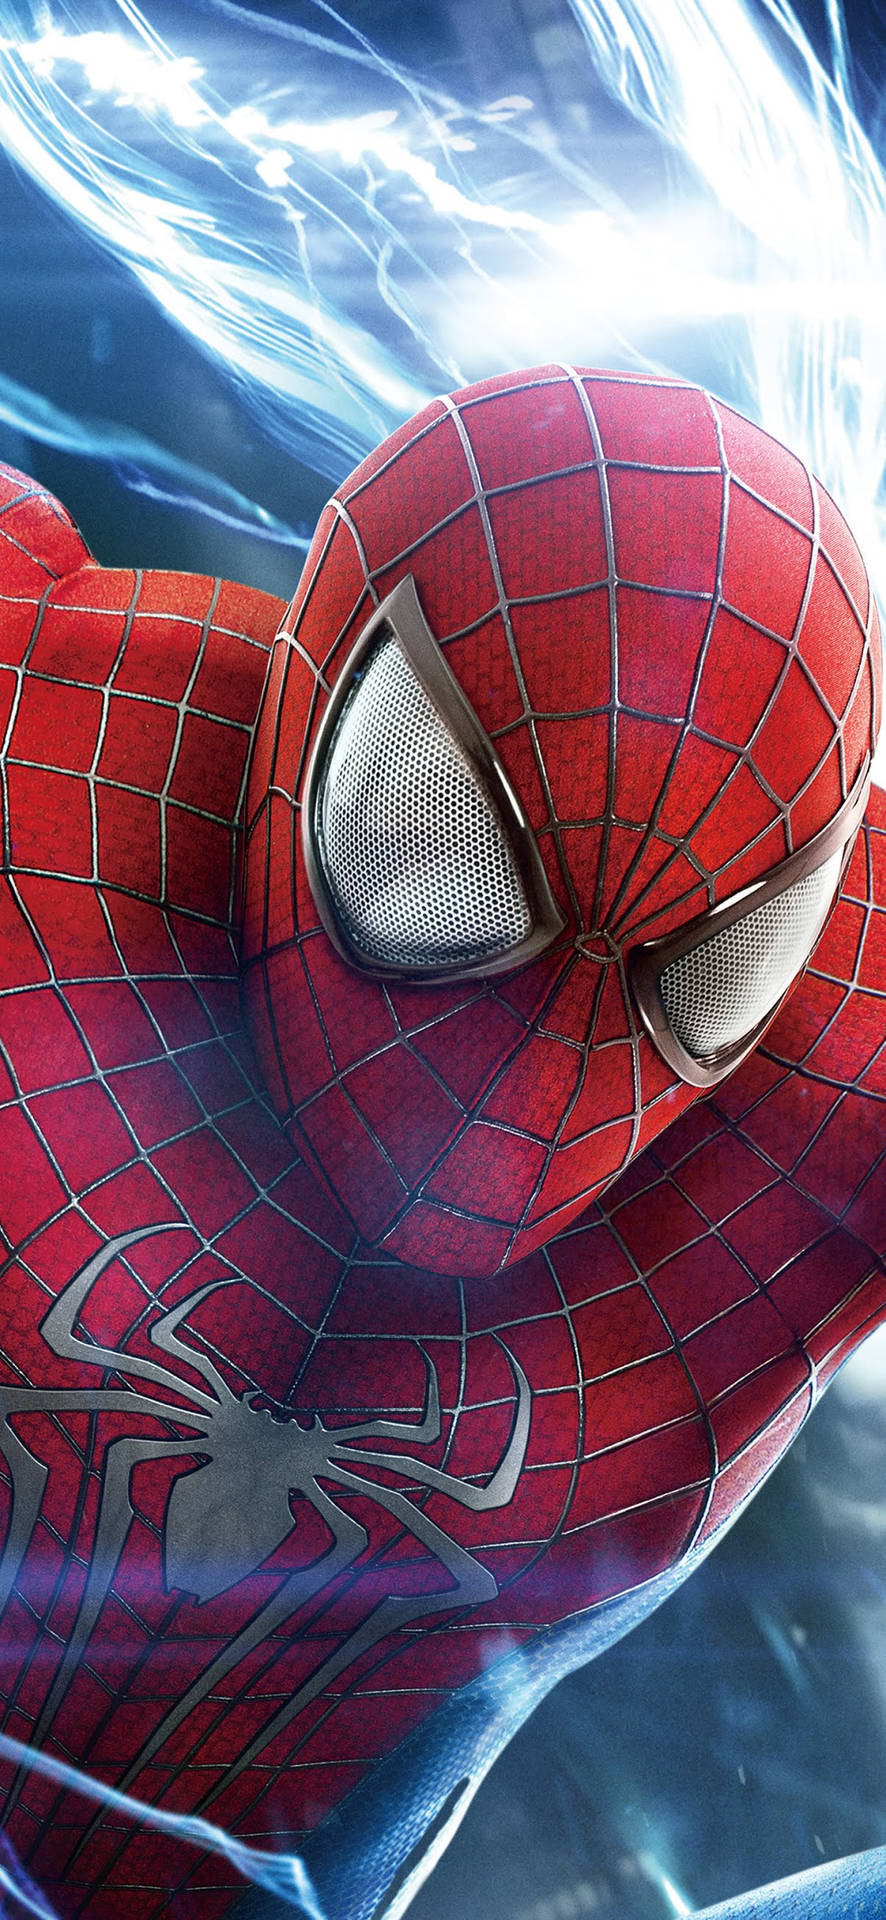 Spider Man Face Mobile Wallpaper